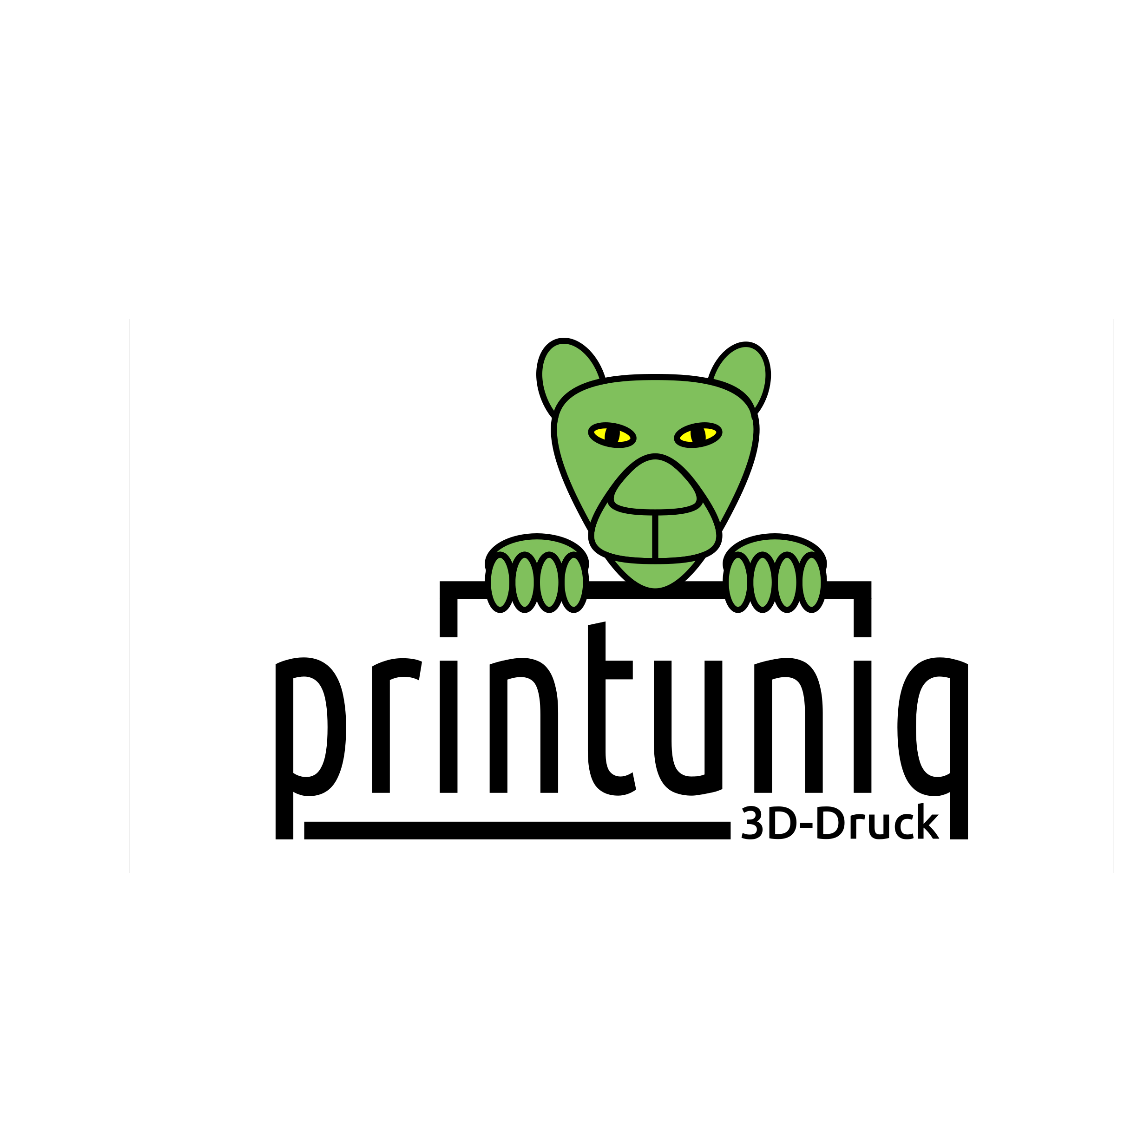 Bilder printuniq 3D-Druck